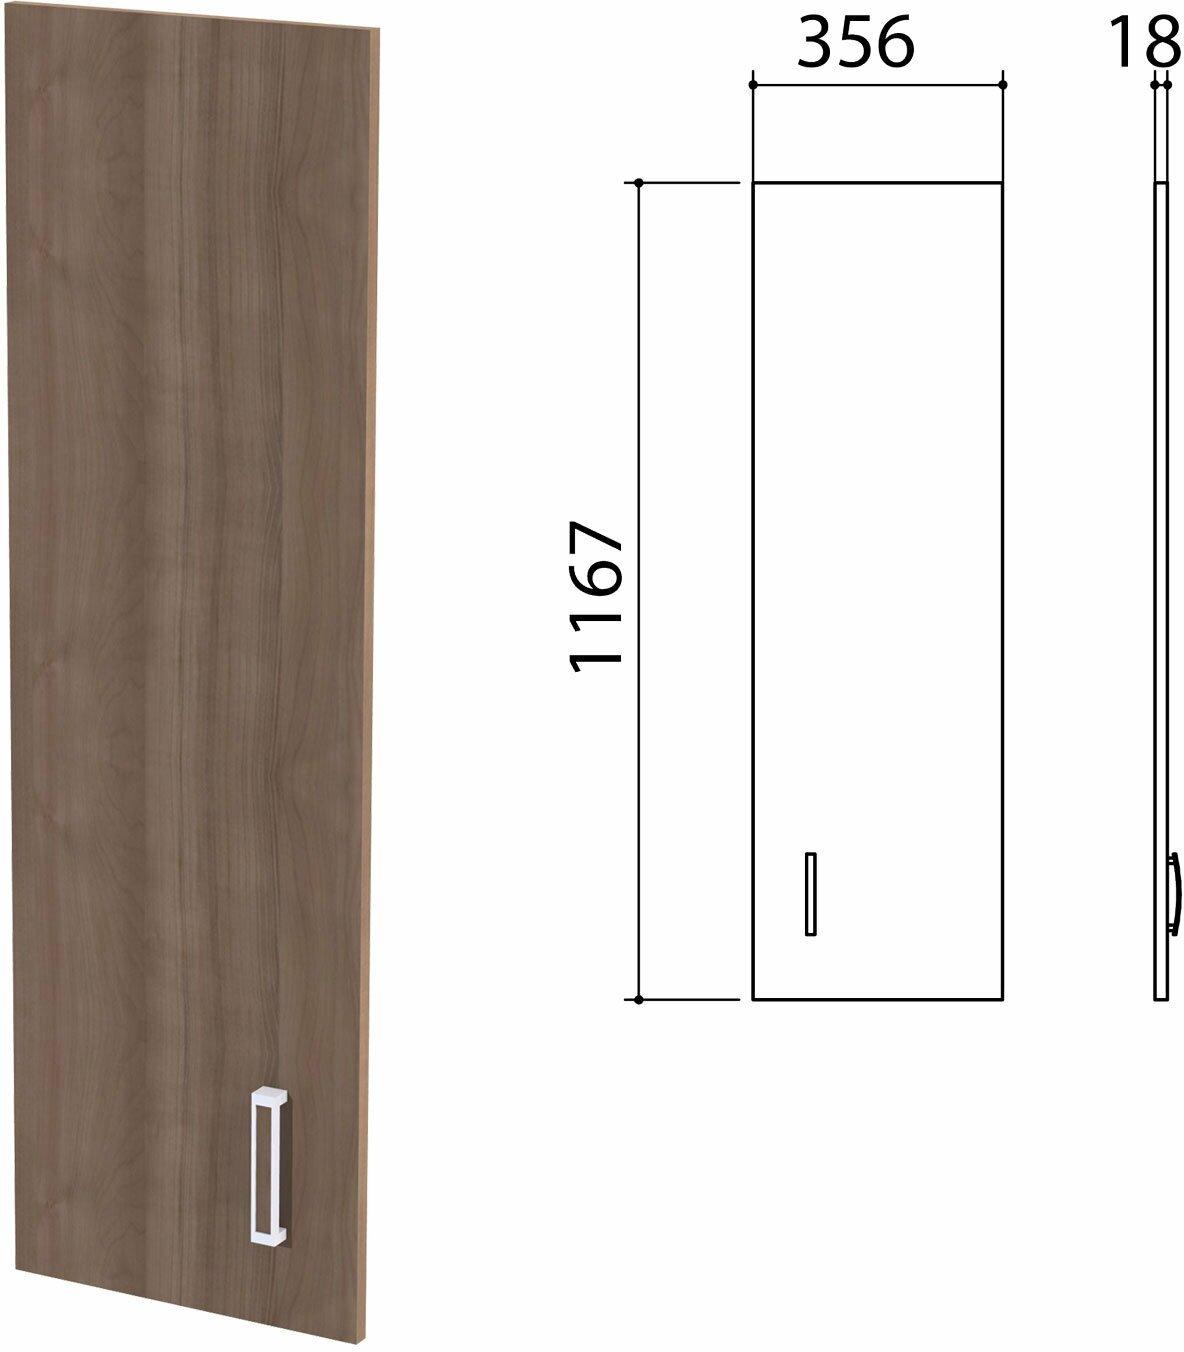 Дверь ЛДСП средняя "Приоритет", 356х18х1167 мм, без фурнитуры, лагос, К-937, К-937 лагос